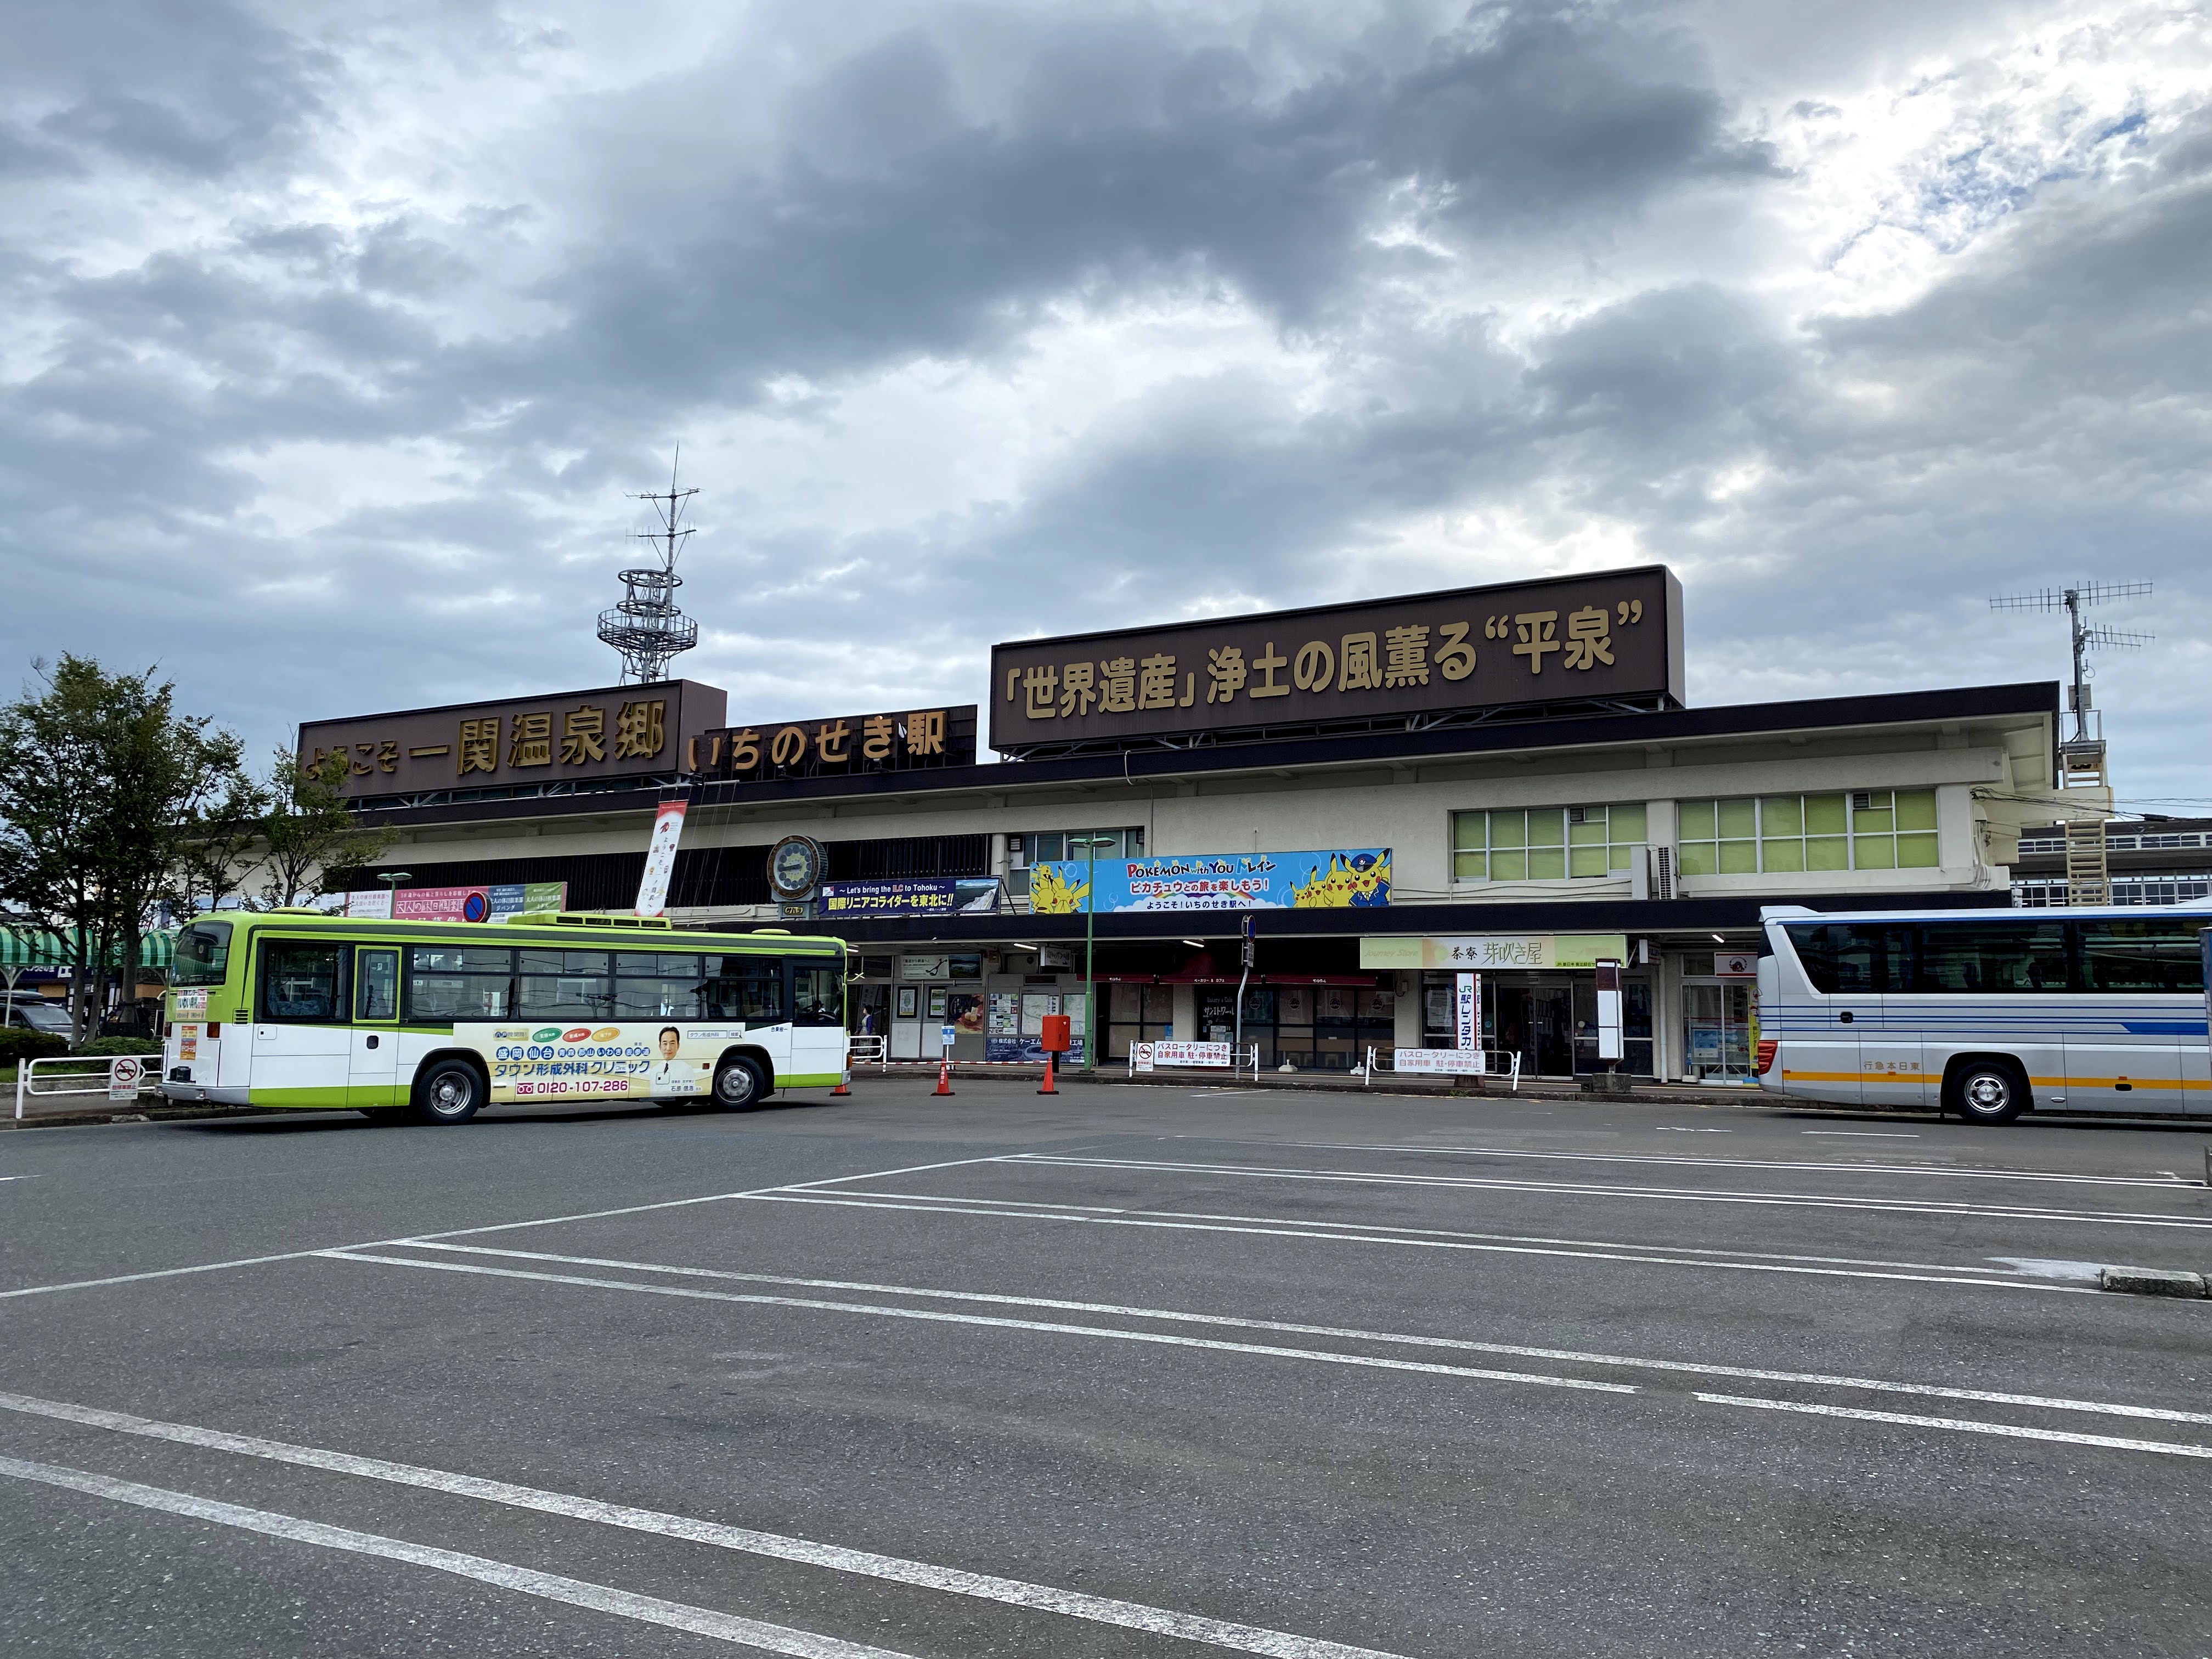 Ichinoseki Station - Wikipedia